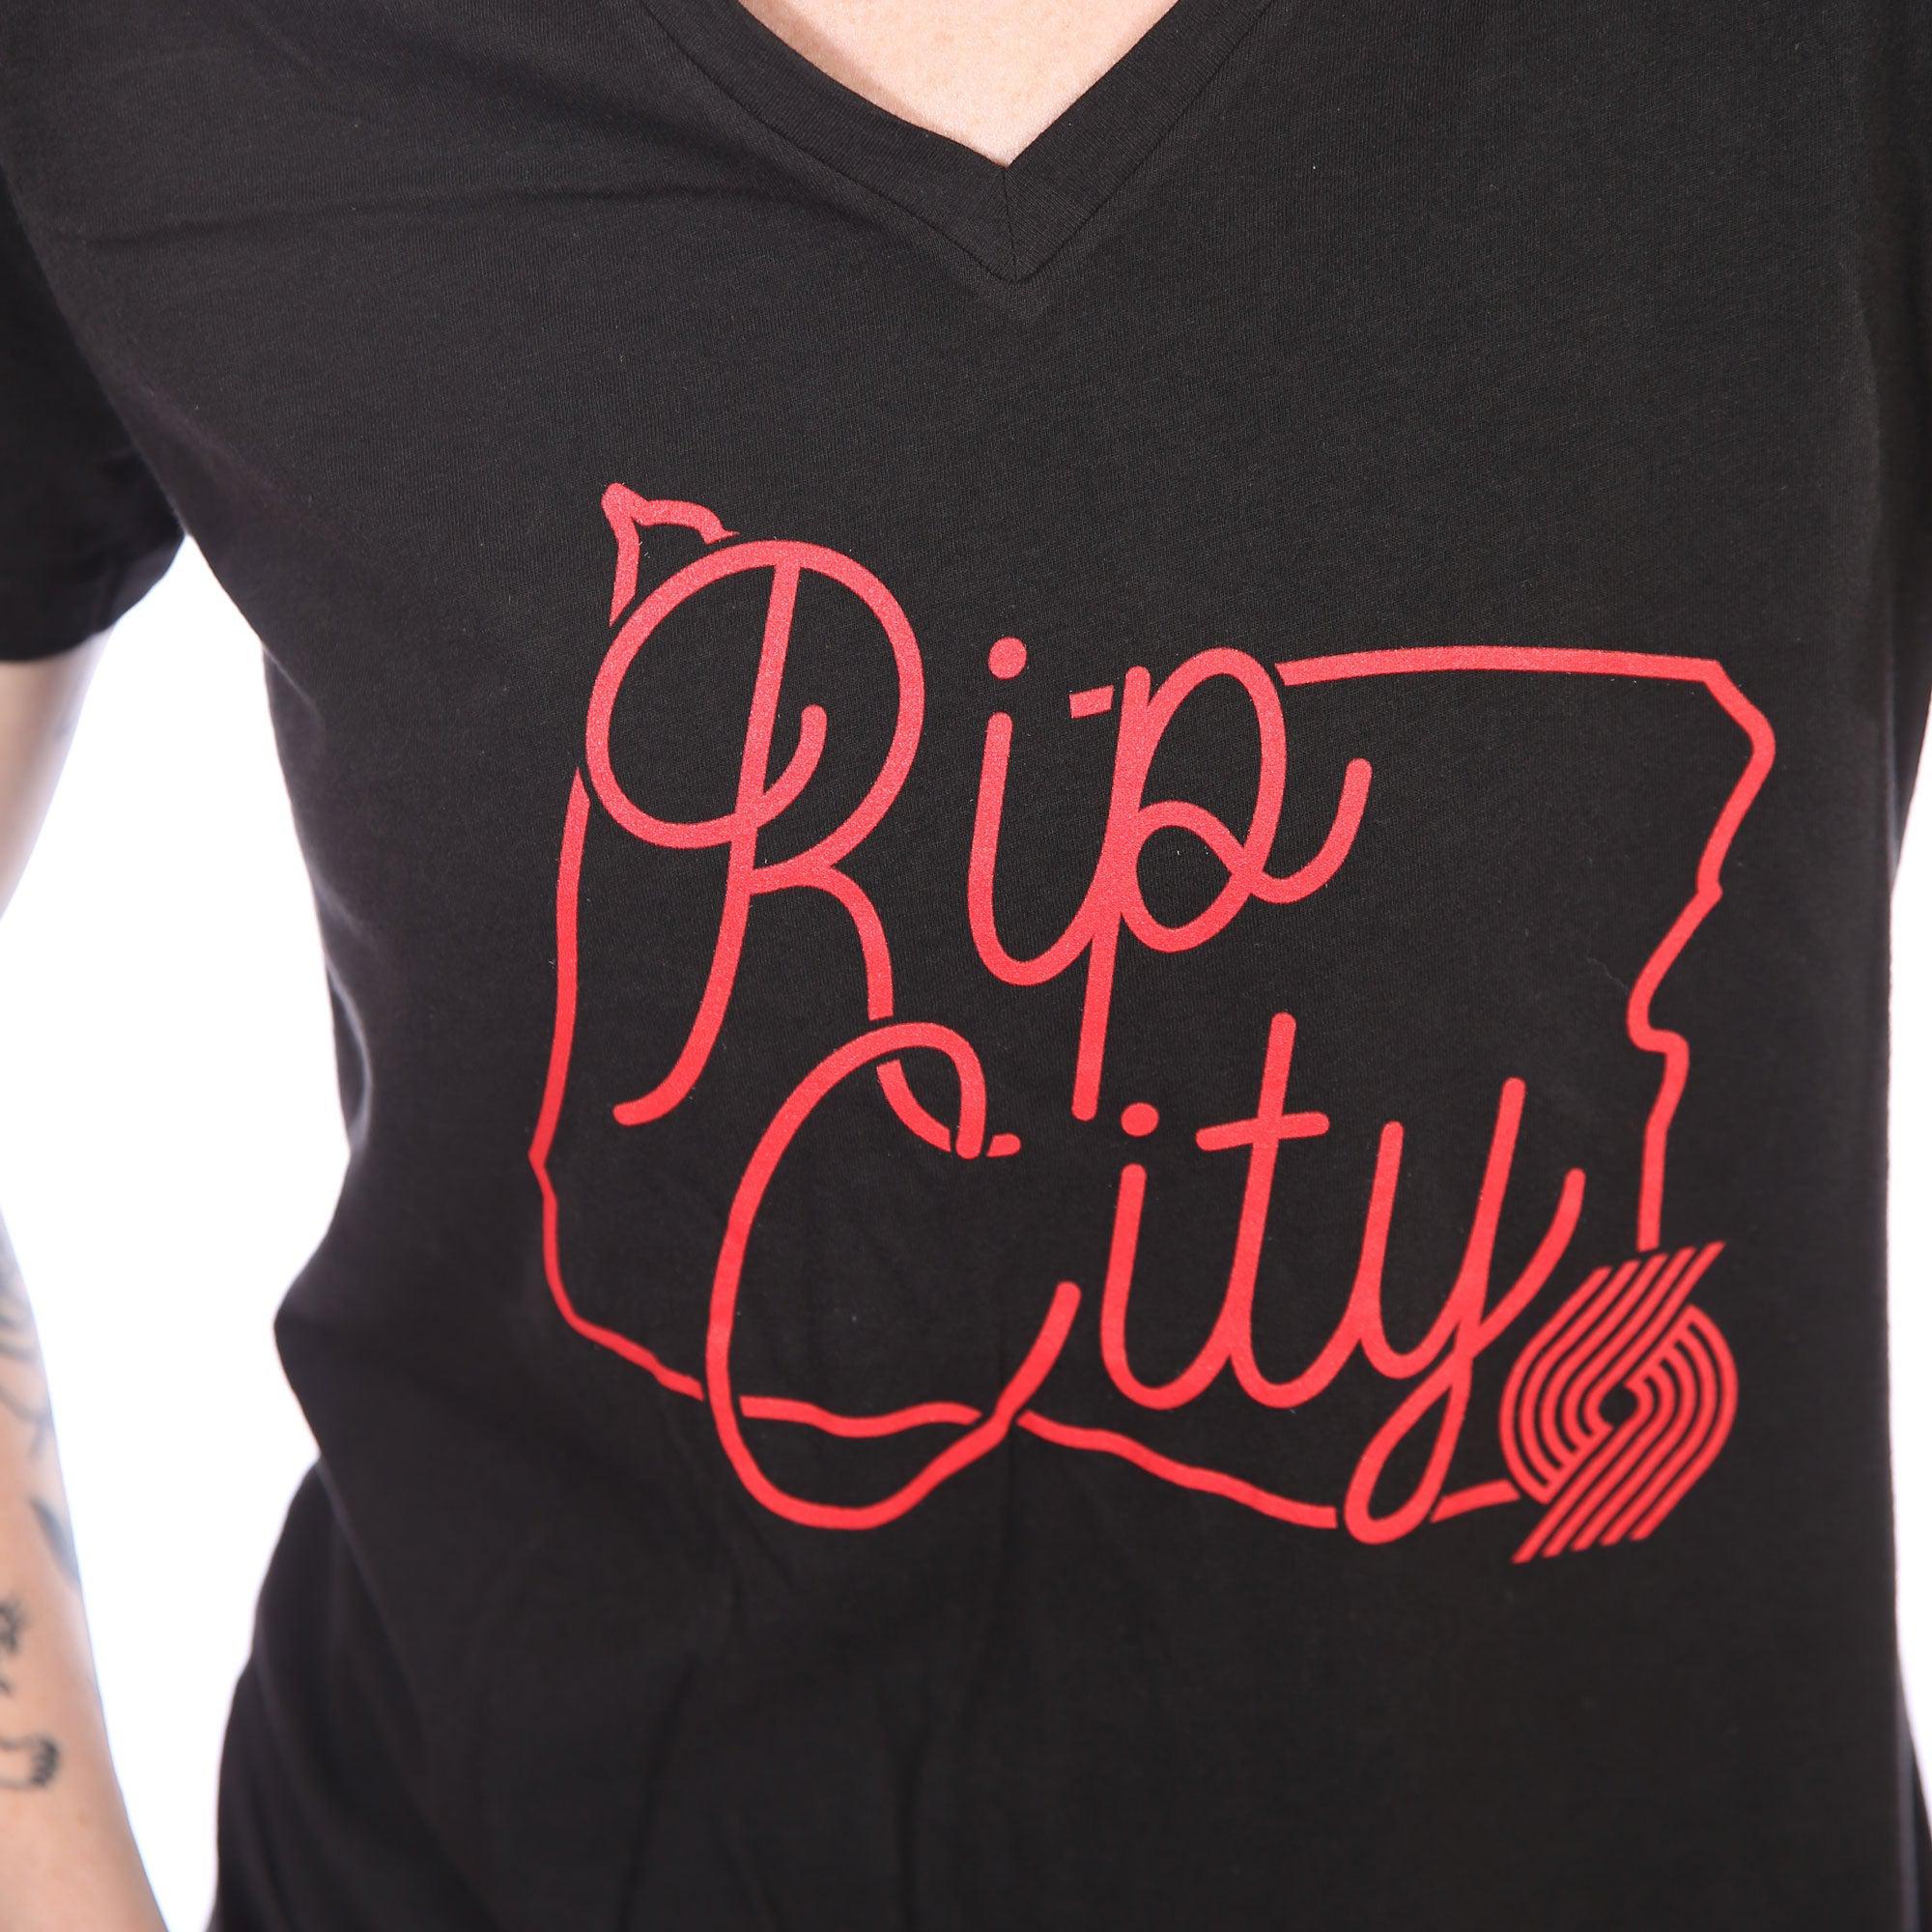 Portland Trail Blazers Rip City Script State Women's V-neck T-shirt